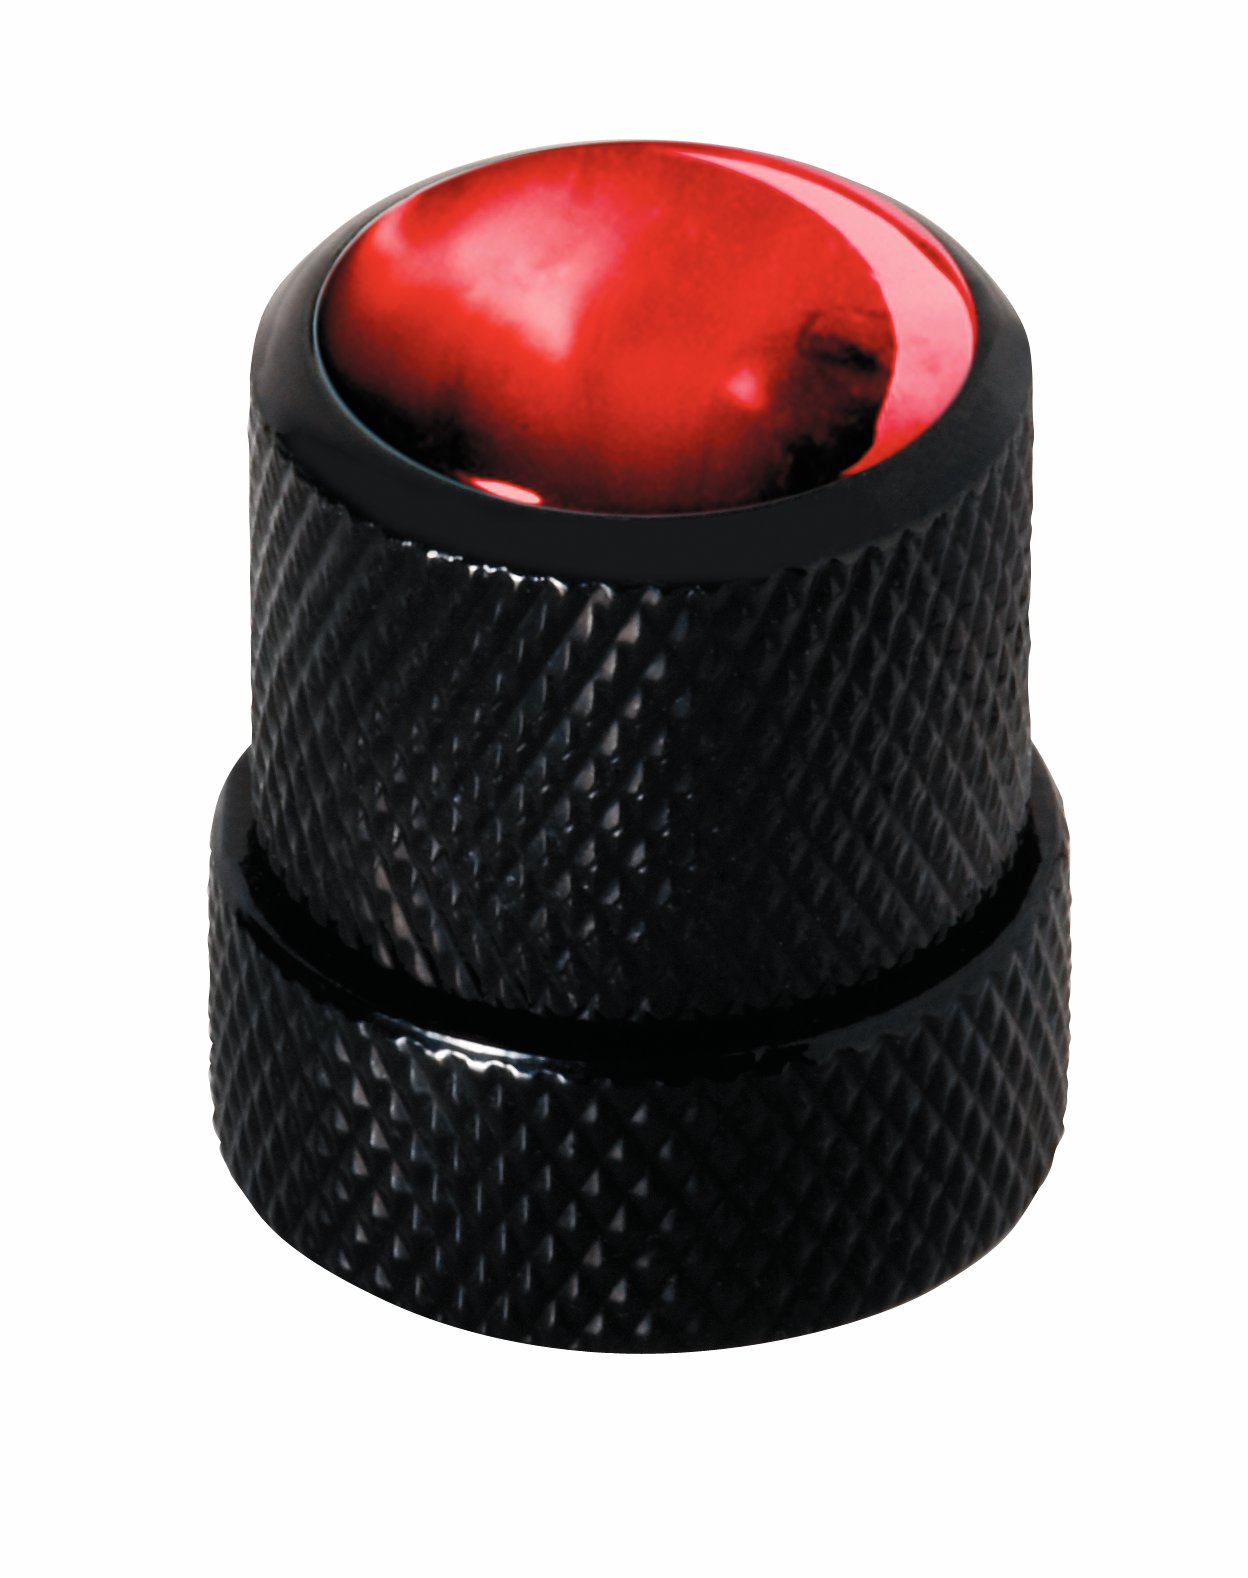 Framus & Warwick - Stacked Potentiometer Dome Knob, Red Perloid, Cap - Black